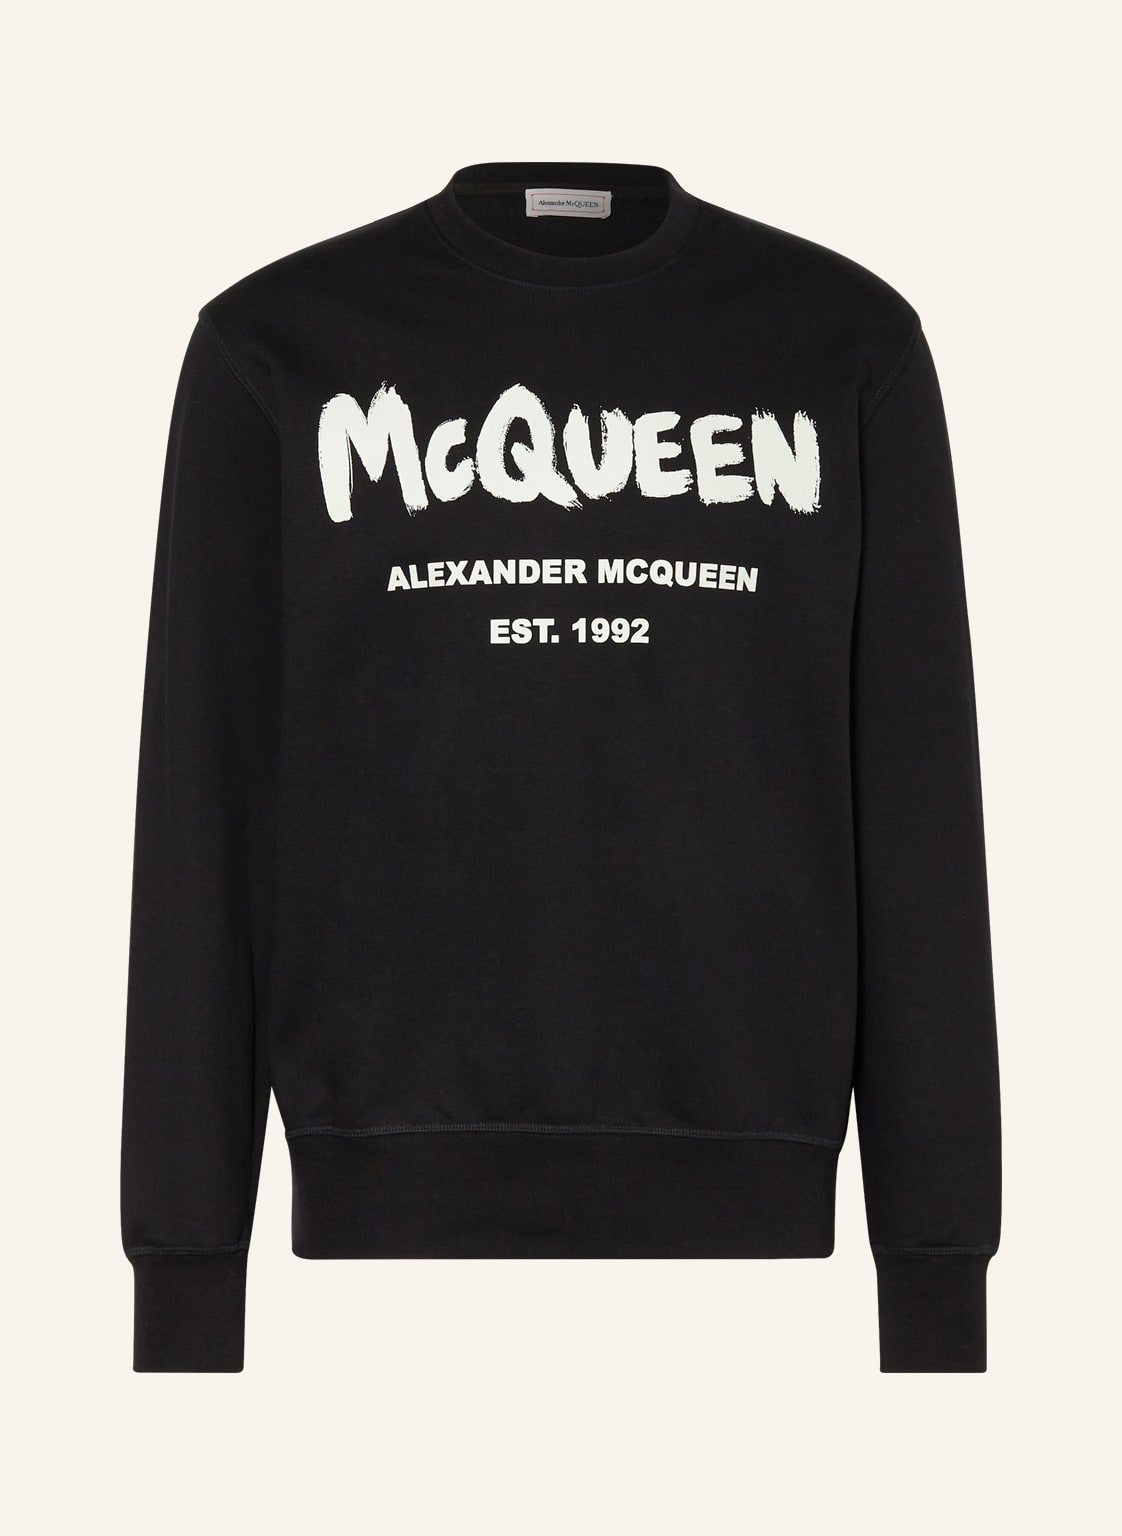 Alexander Mcqueen Sweatshirt schwarz von alexander mcqueen